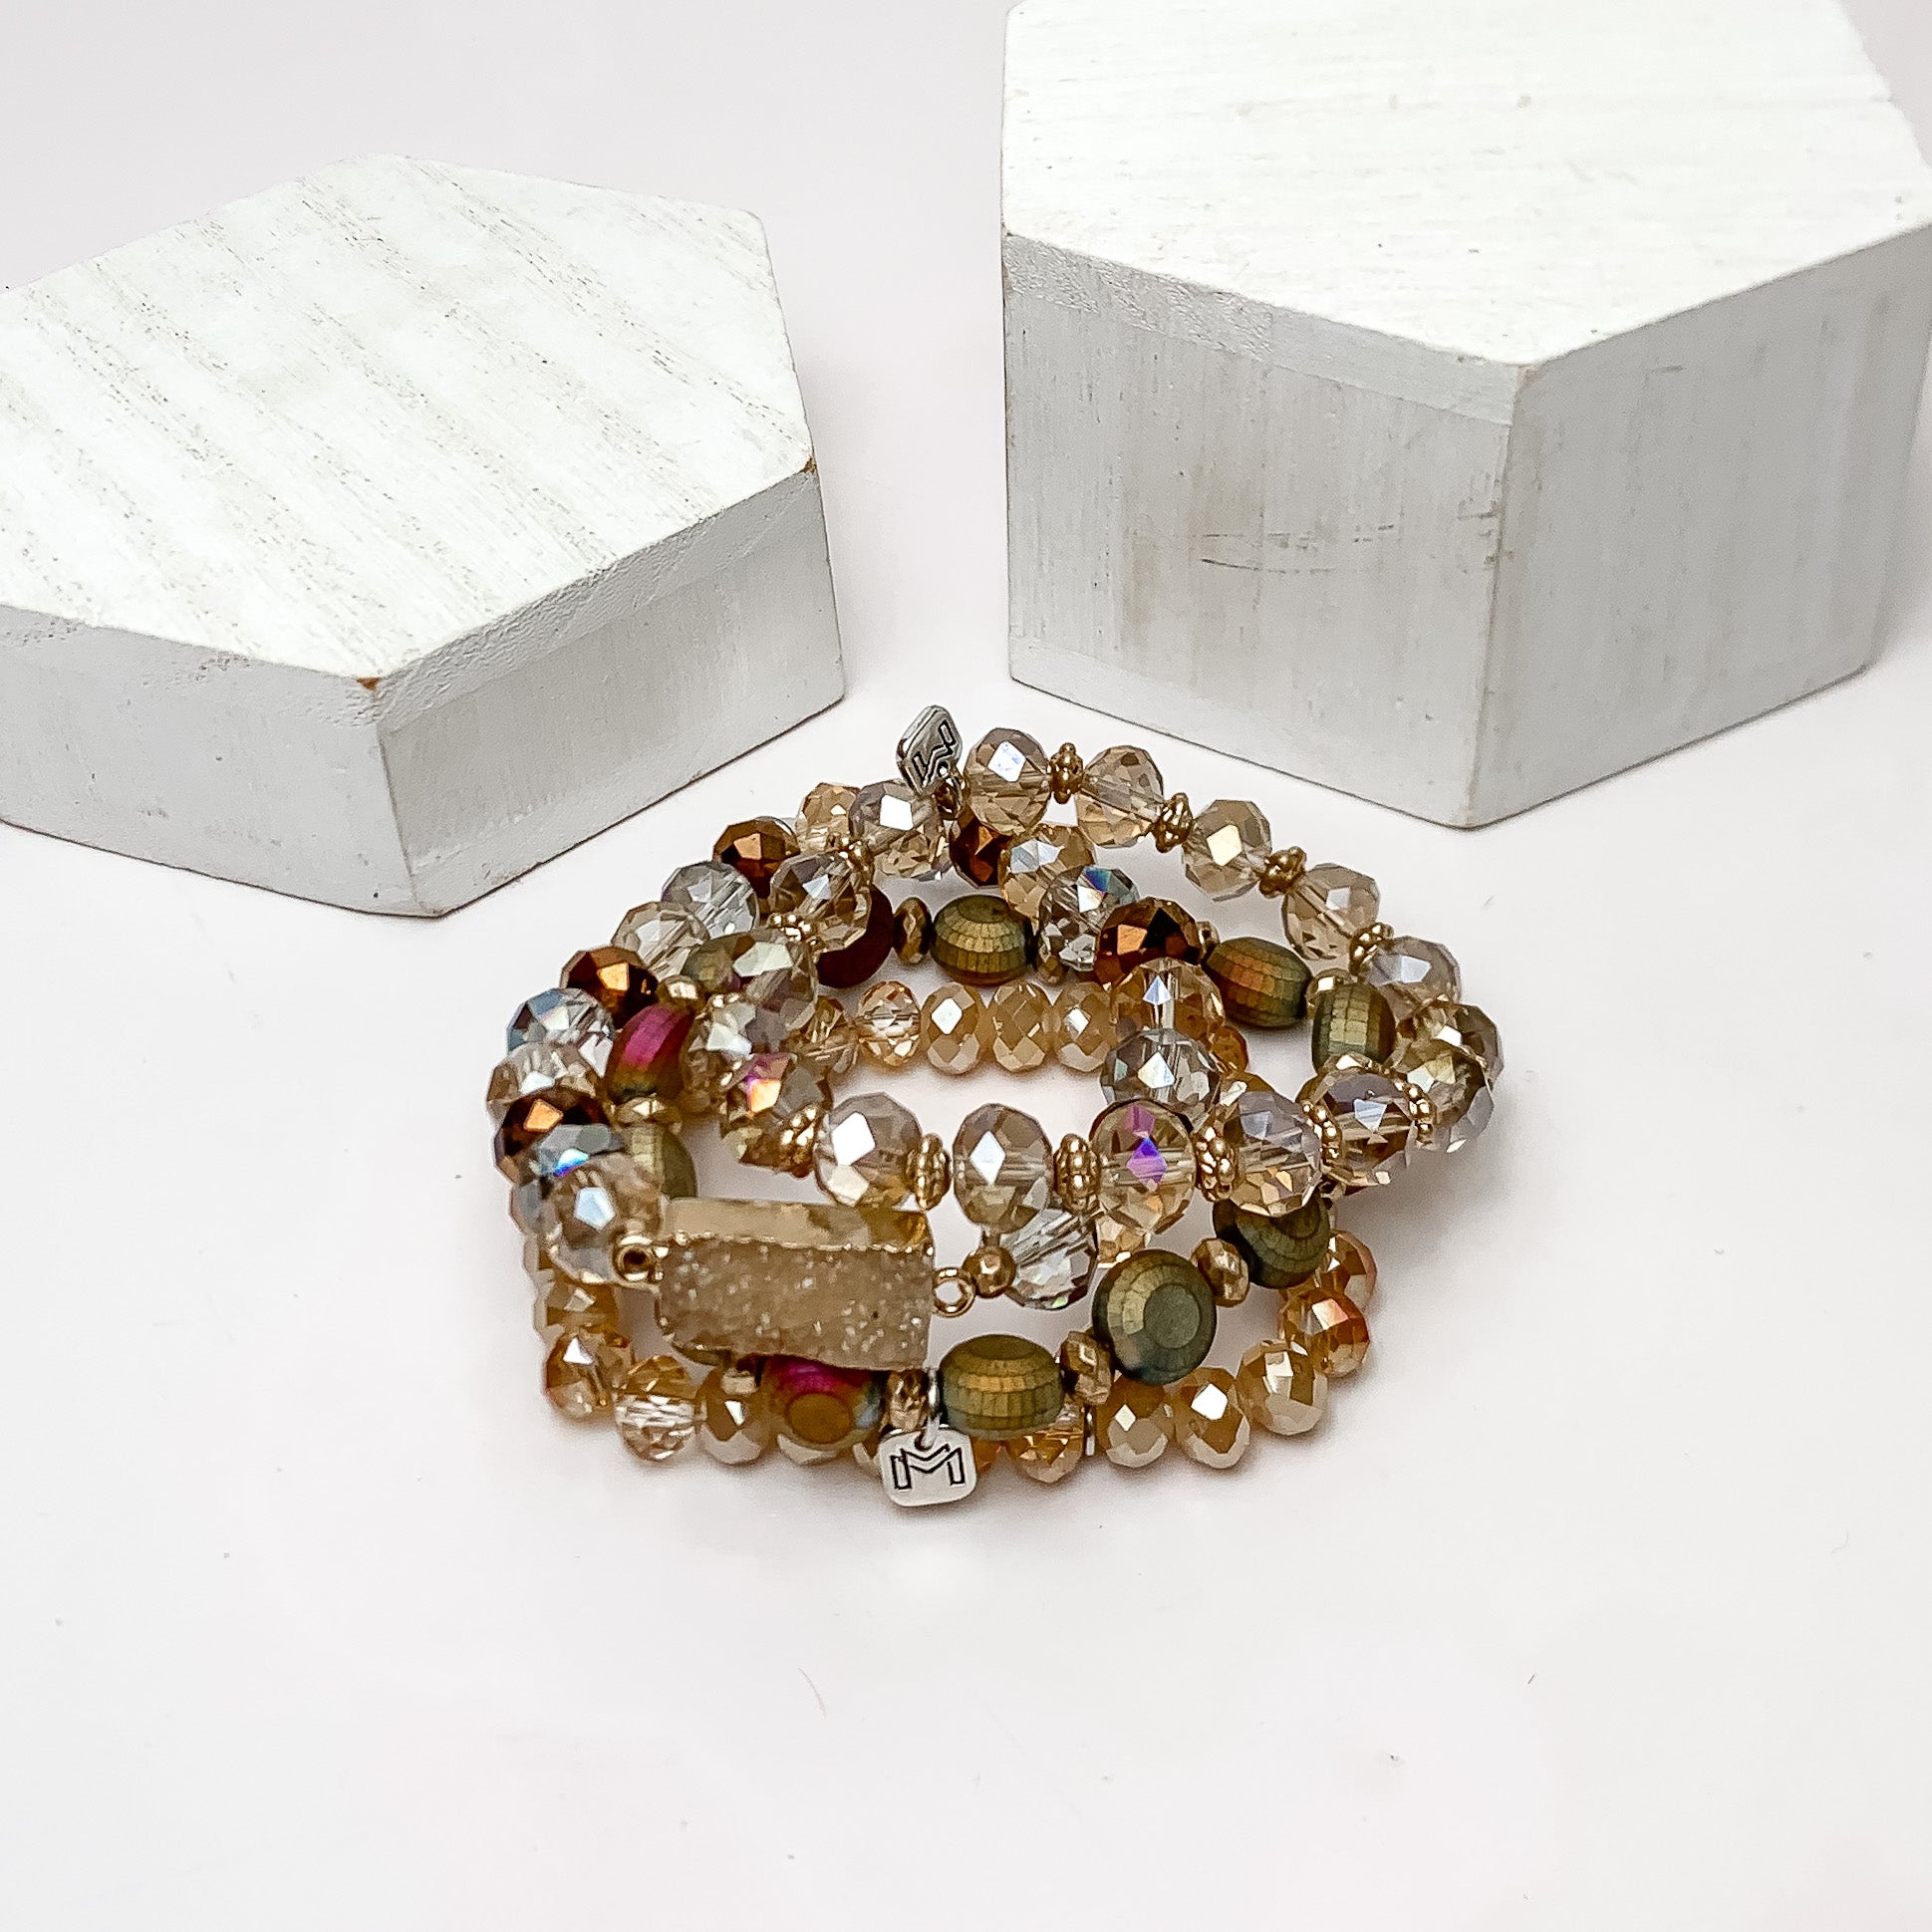 Set of Four | Crystal Beaded Bracelet Set in Gold Tones - Giddy Up Glamour Boutique